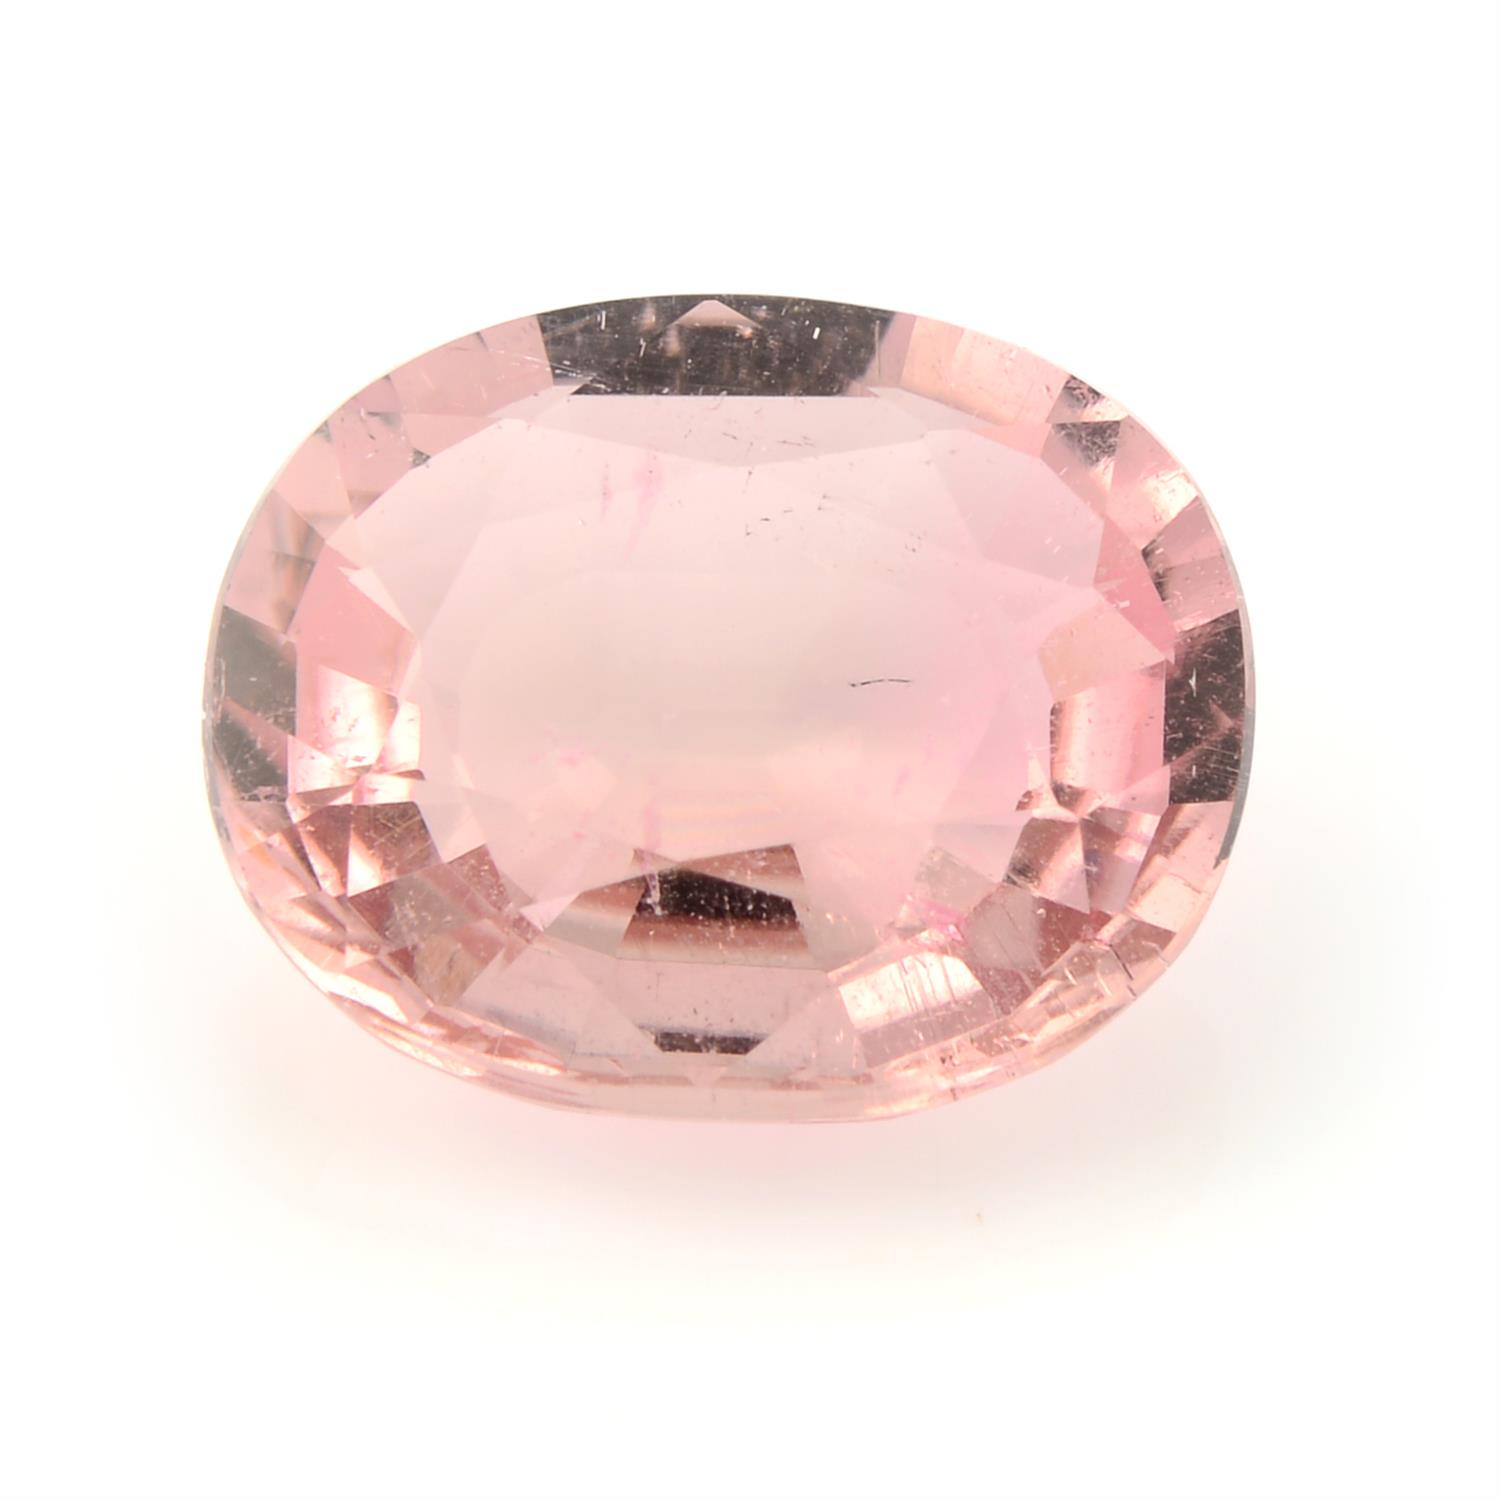 A pink oval-shape tourmaline, weight 2.59cts.